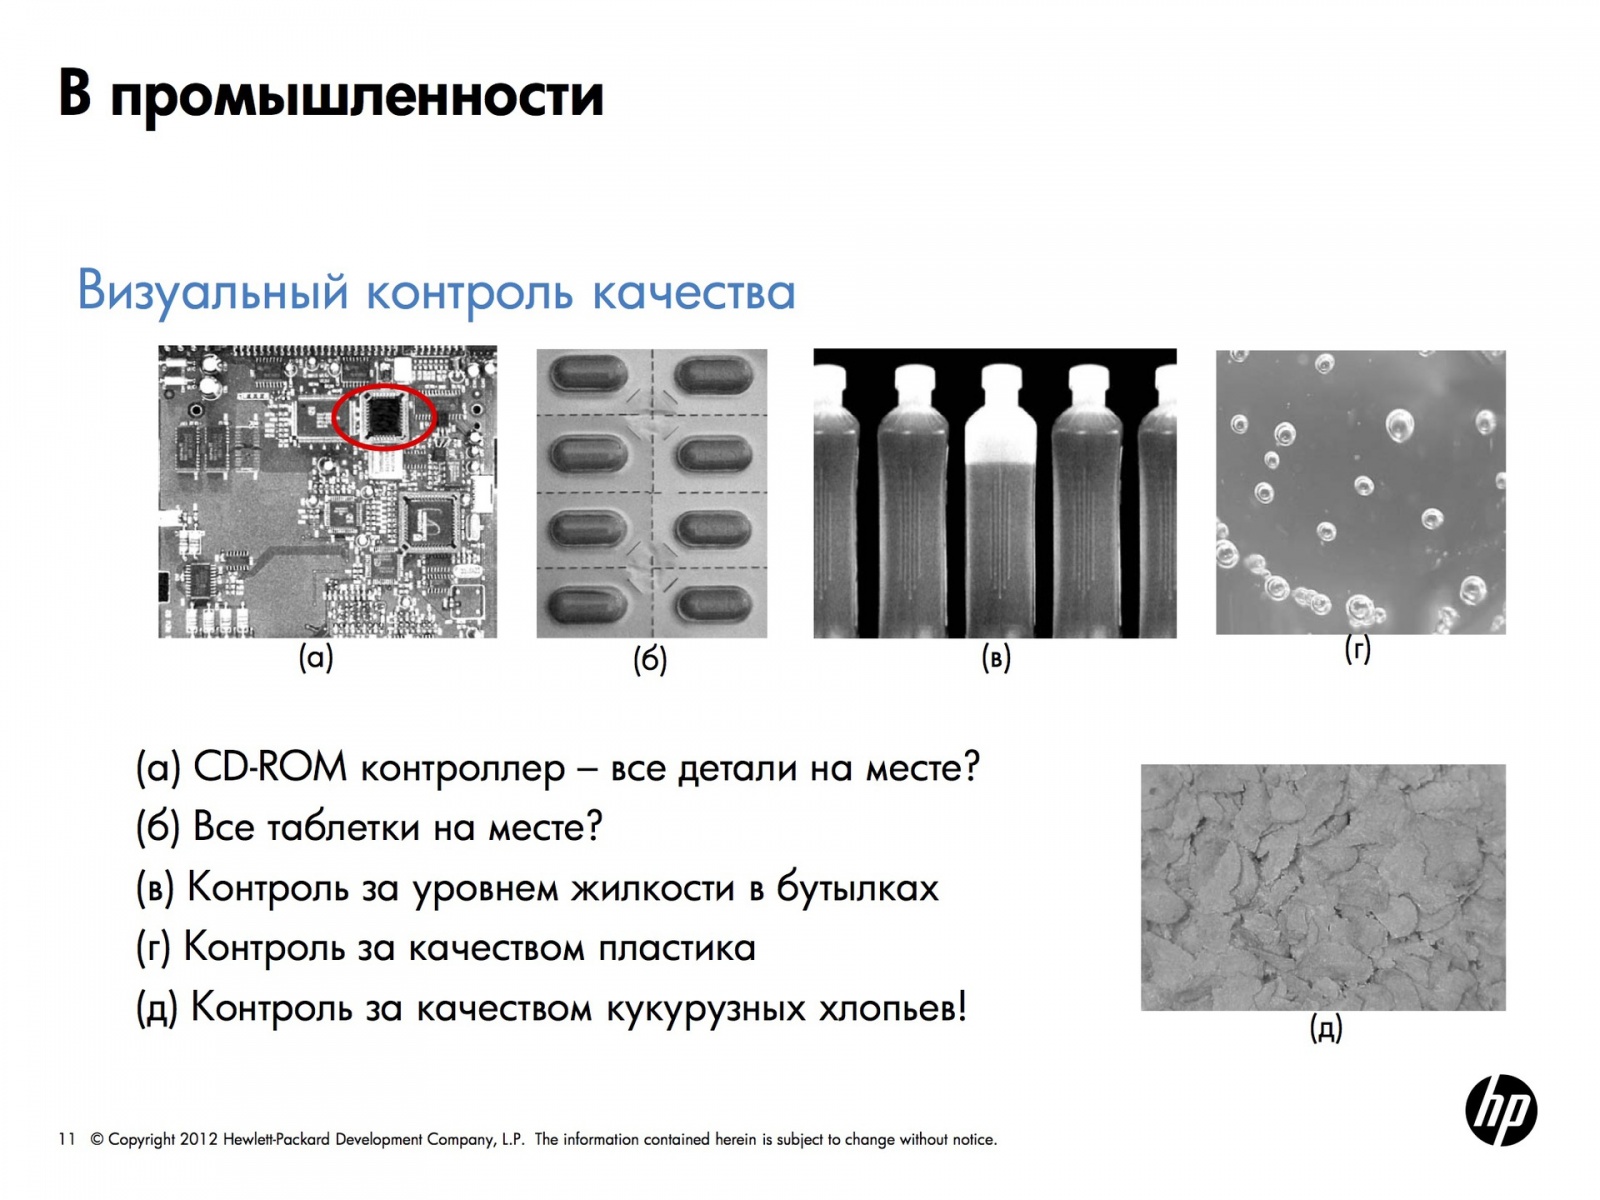 Введение в курс «Анализ изображений и видео». Лекции от Яндекса - 2